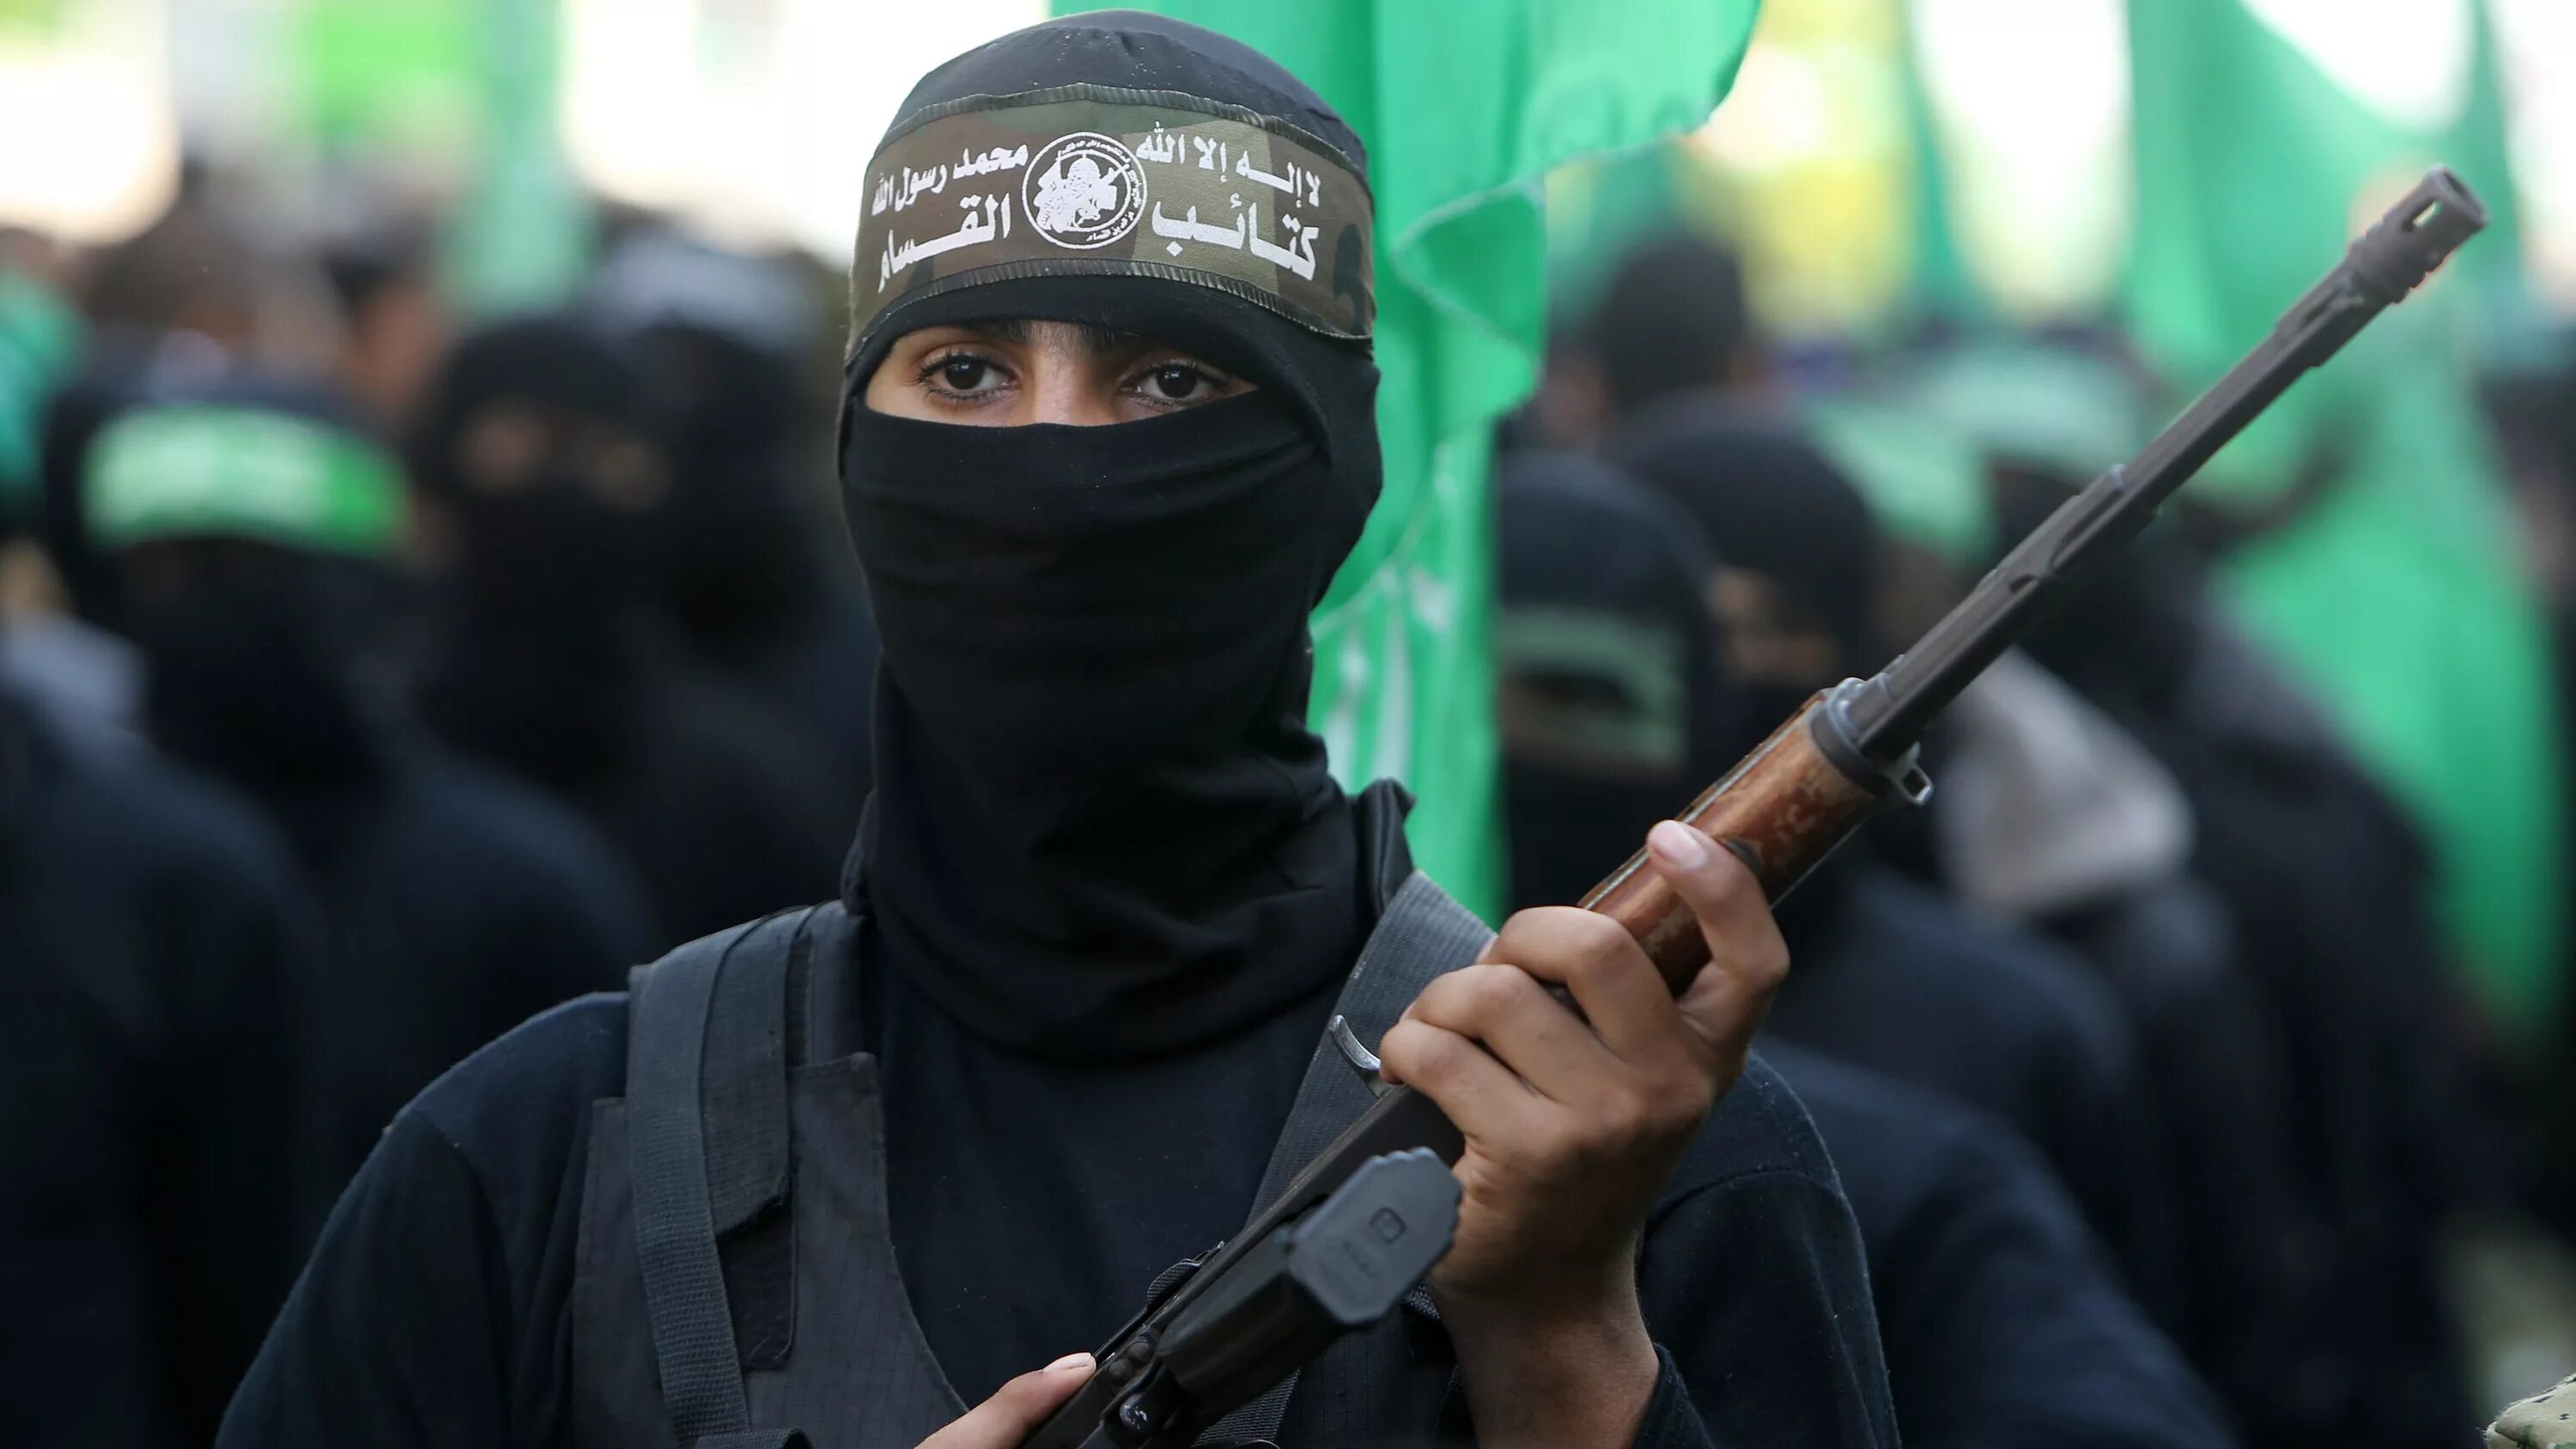 Аль-Каида ХАМАС. Абу Убайда ХАМАС. Аль-Каида ХАМАС заложники.